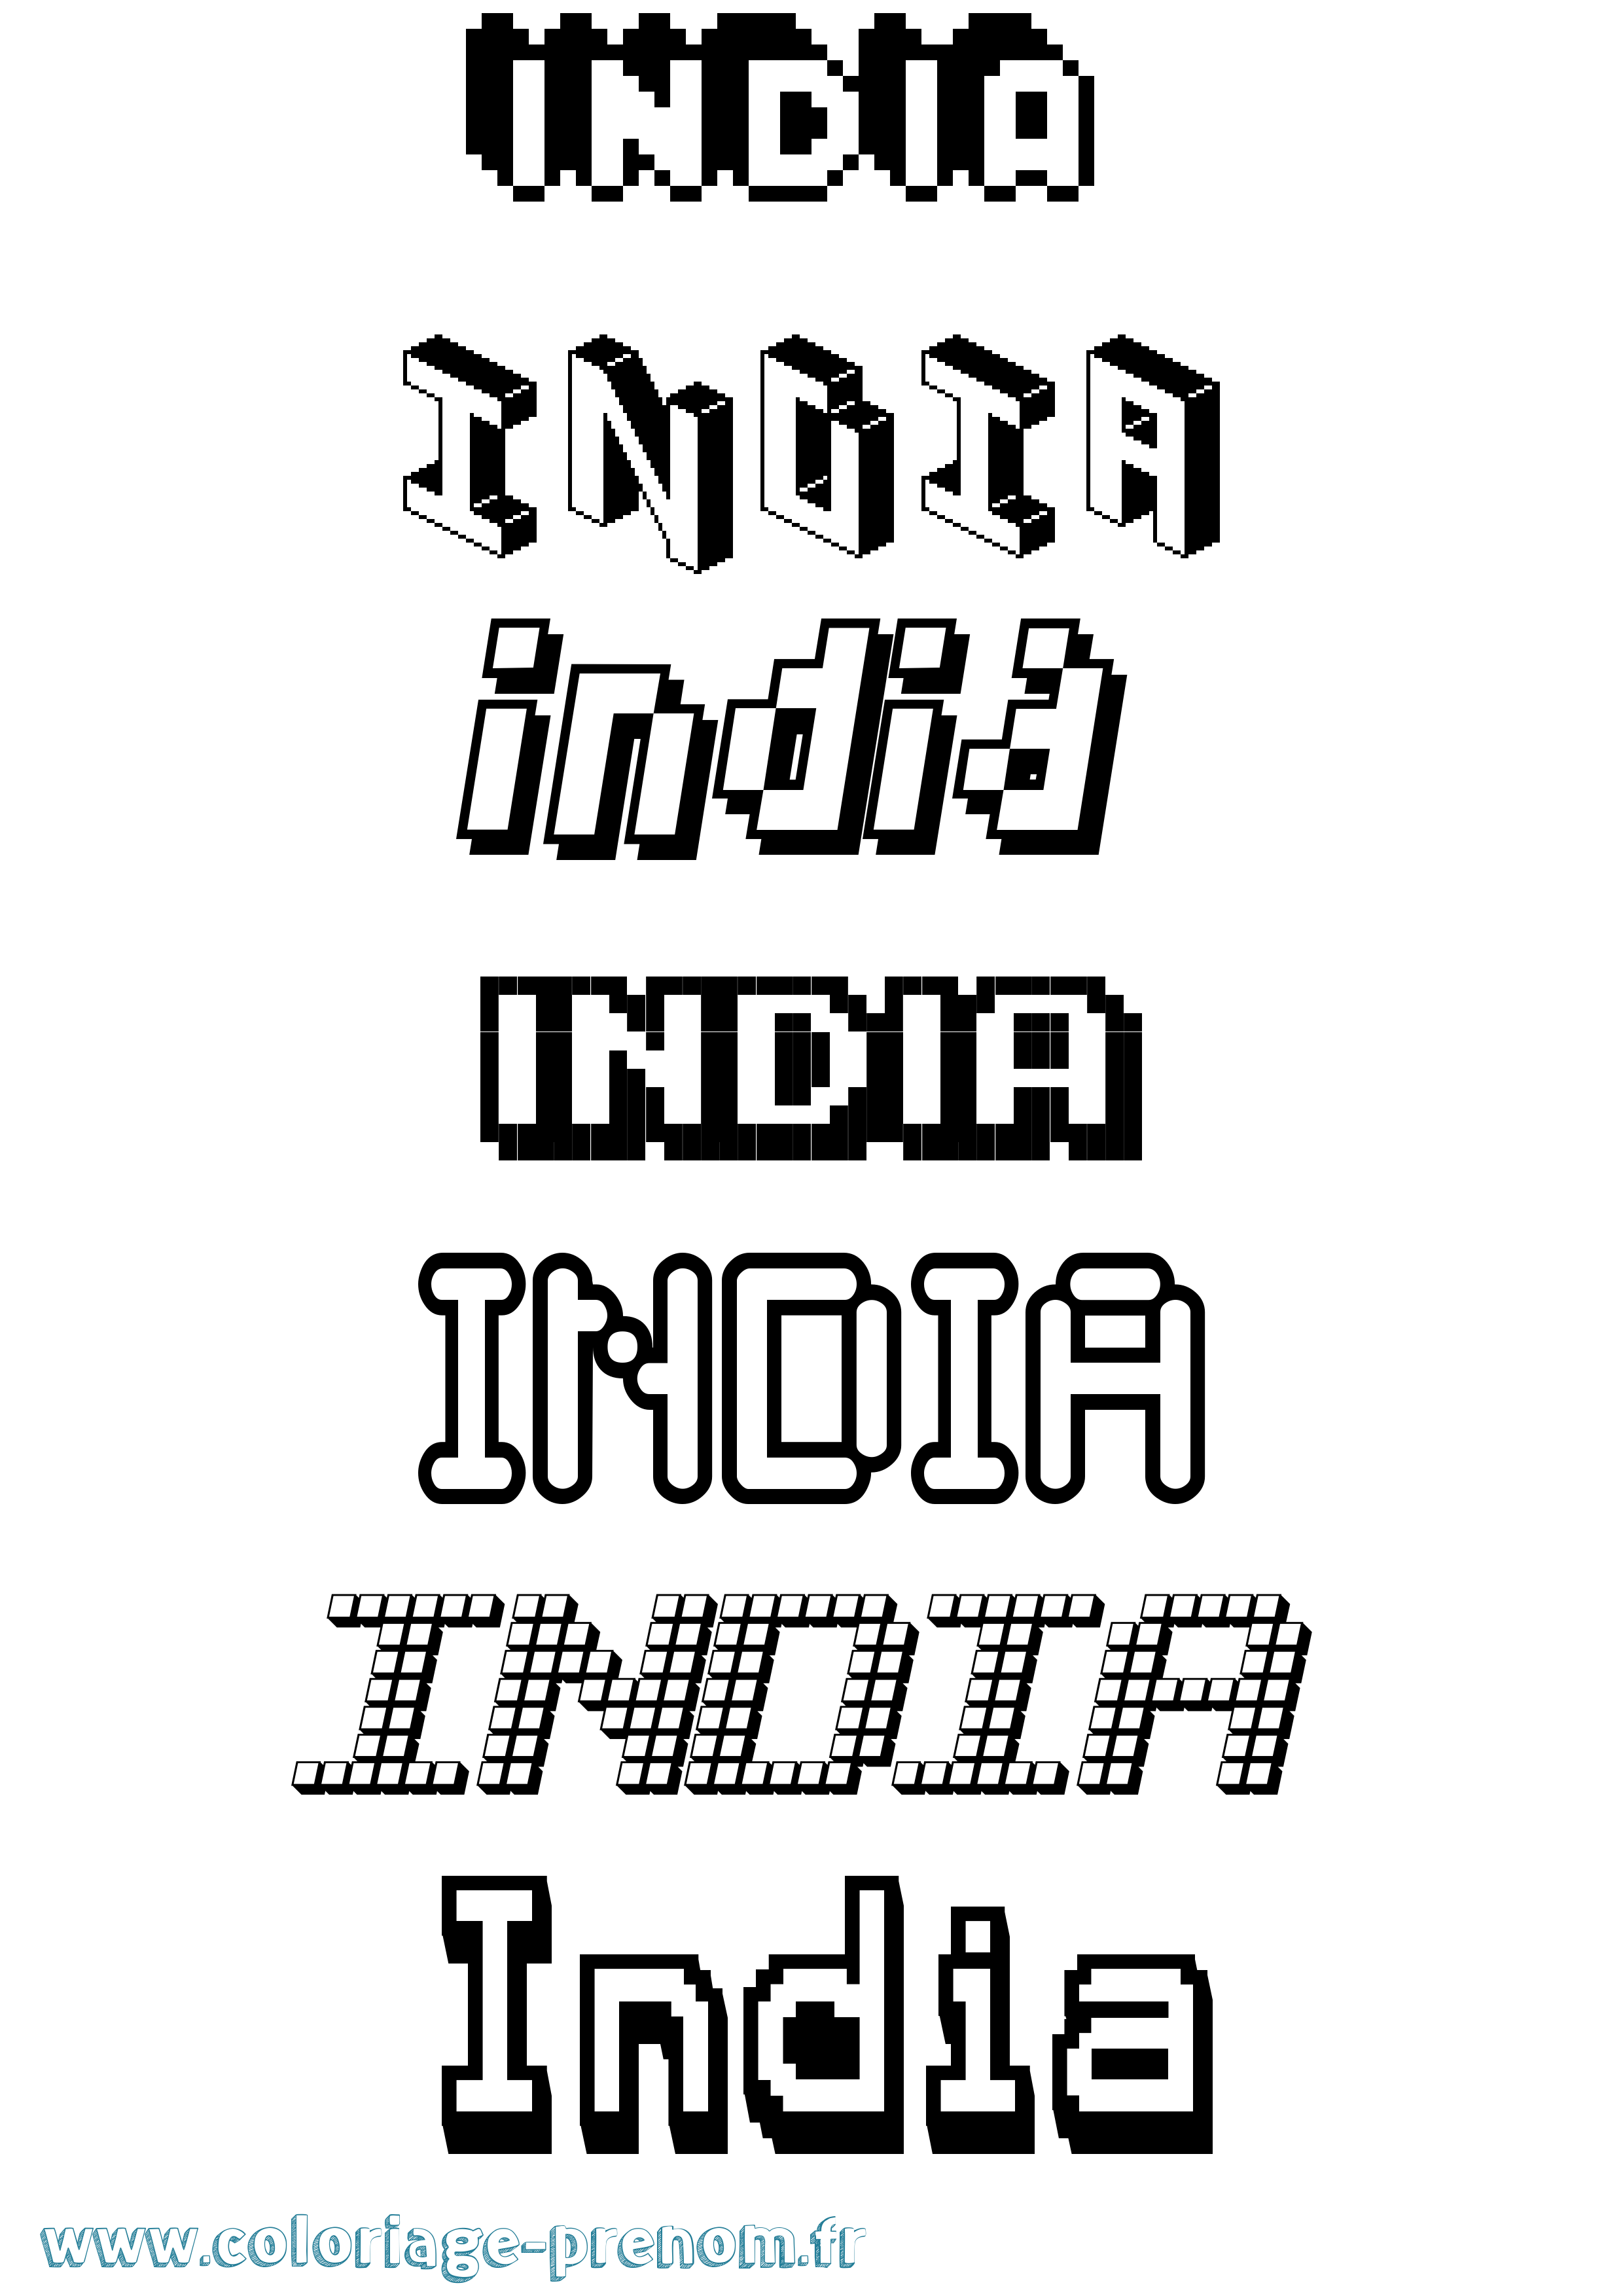 Coloriage prénom India Pixel